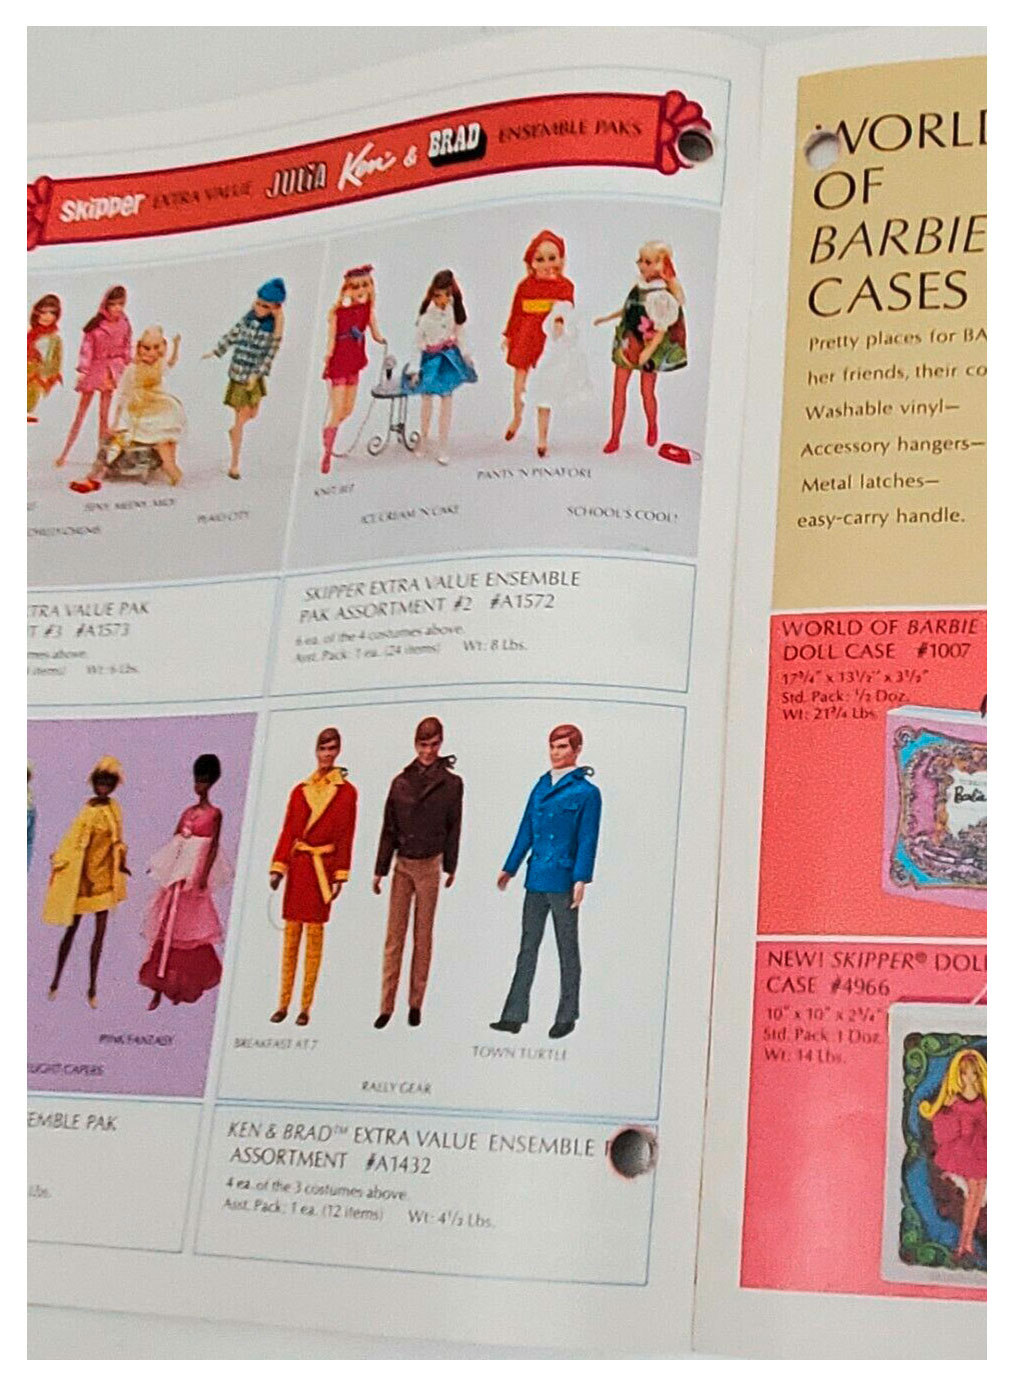 From 1970 Mattels Dolls Spring catalogue